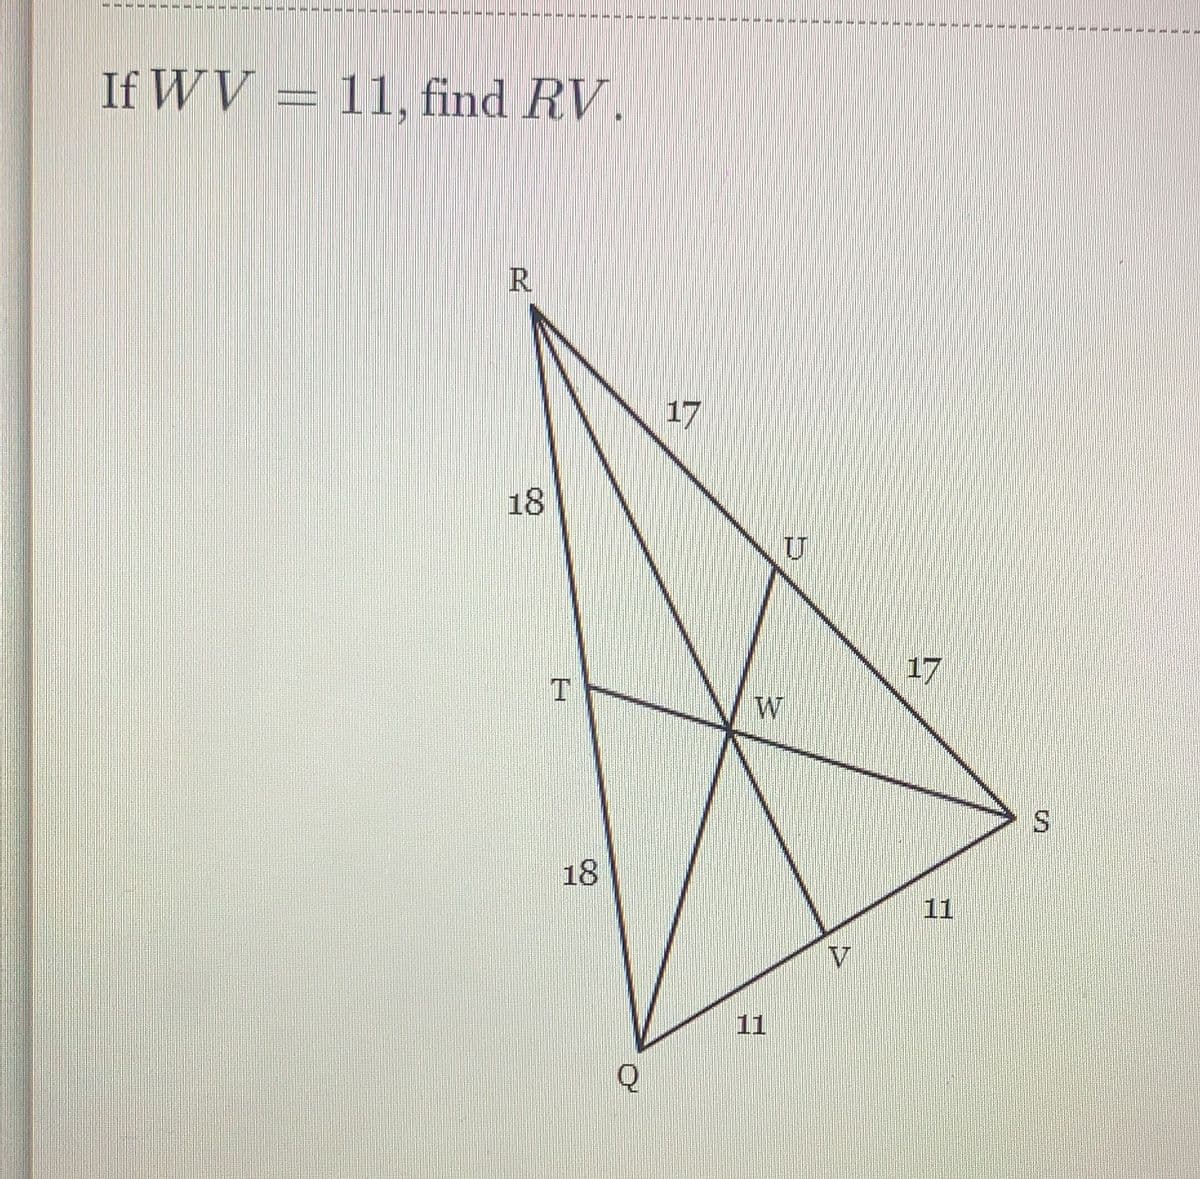 If WV = 11, find RV.
R
18
T
18
Q
17
W
V
17
*